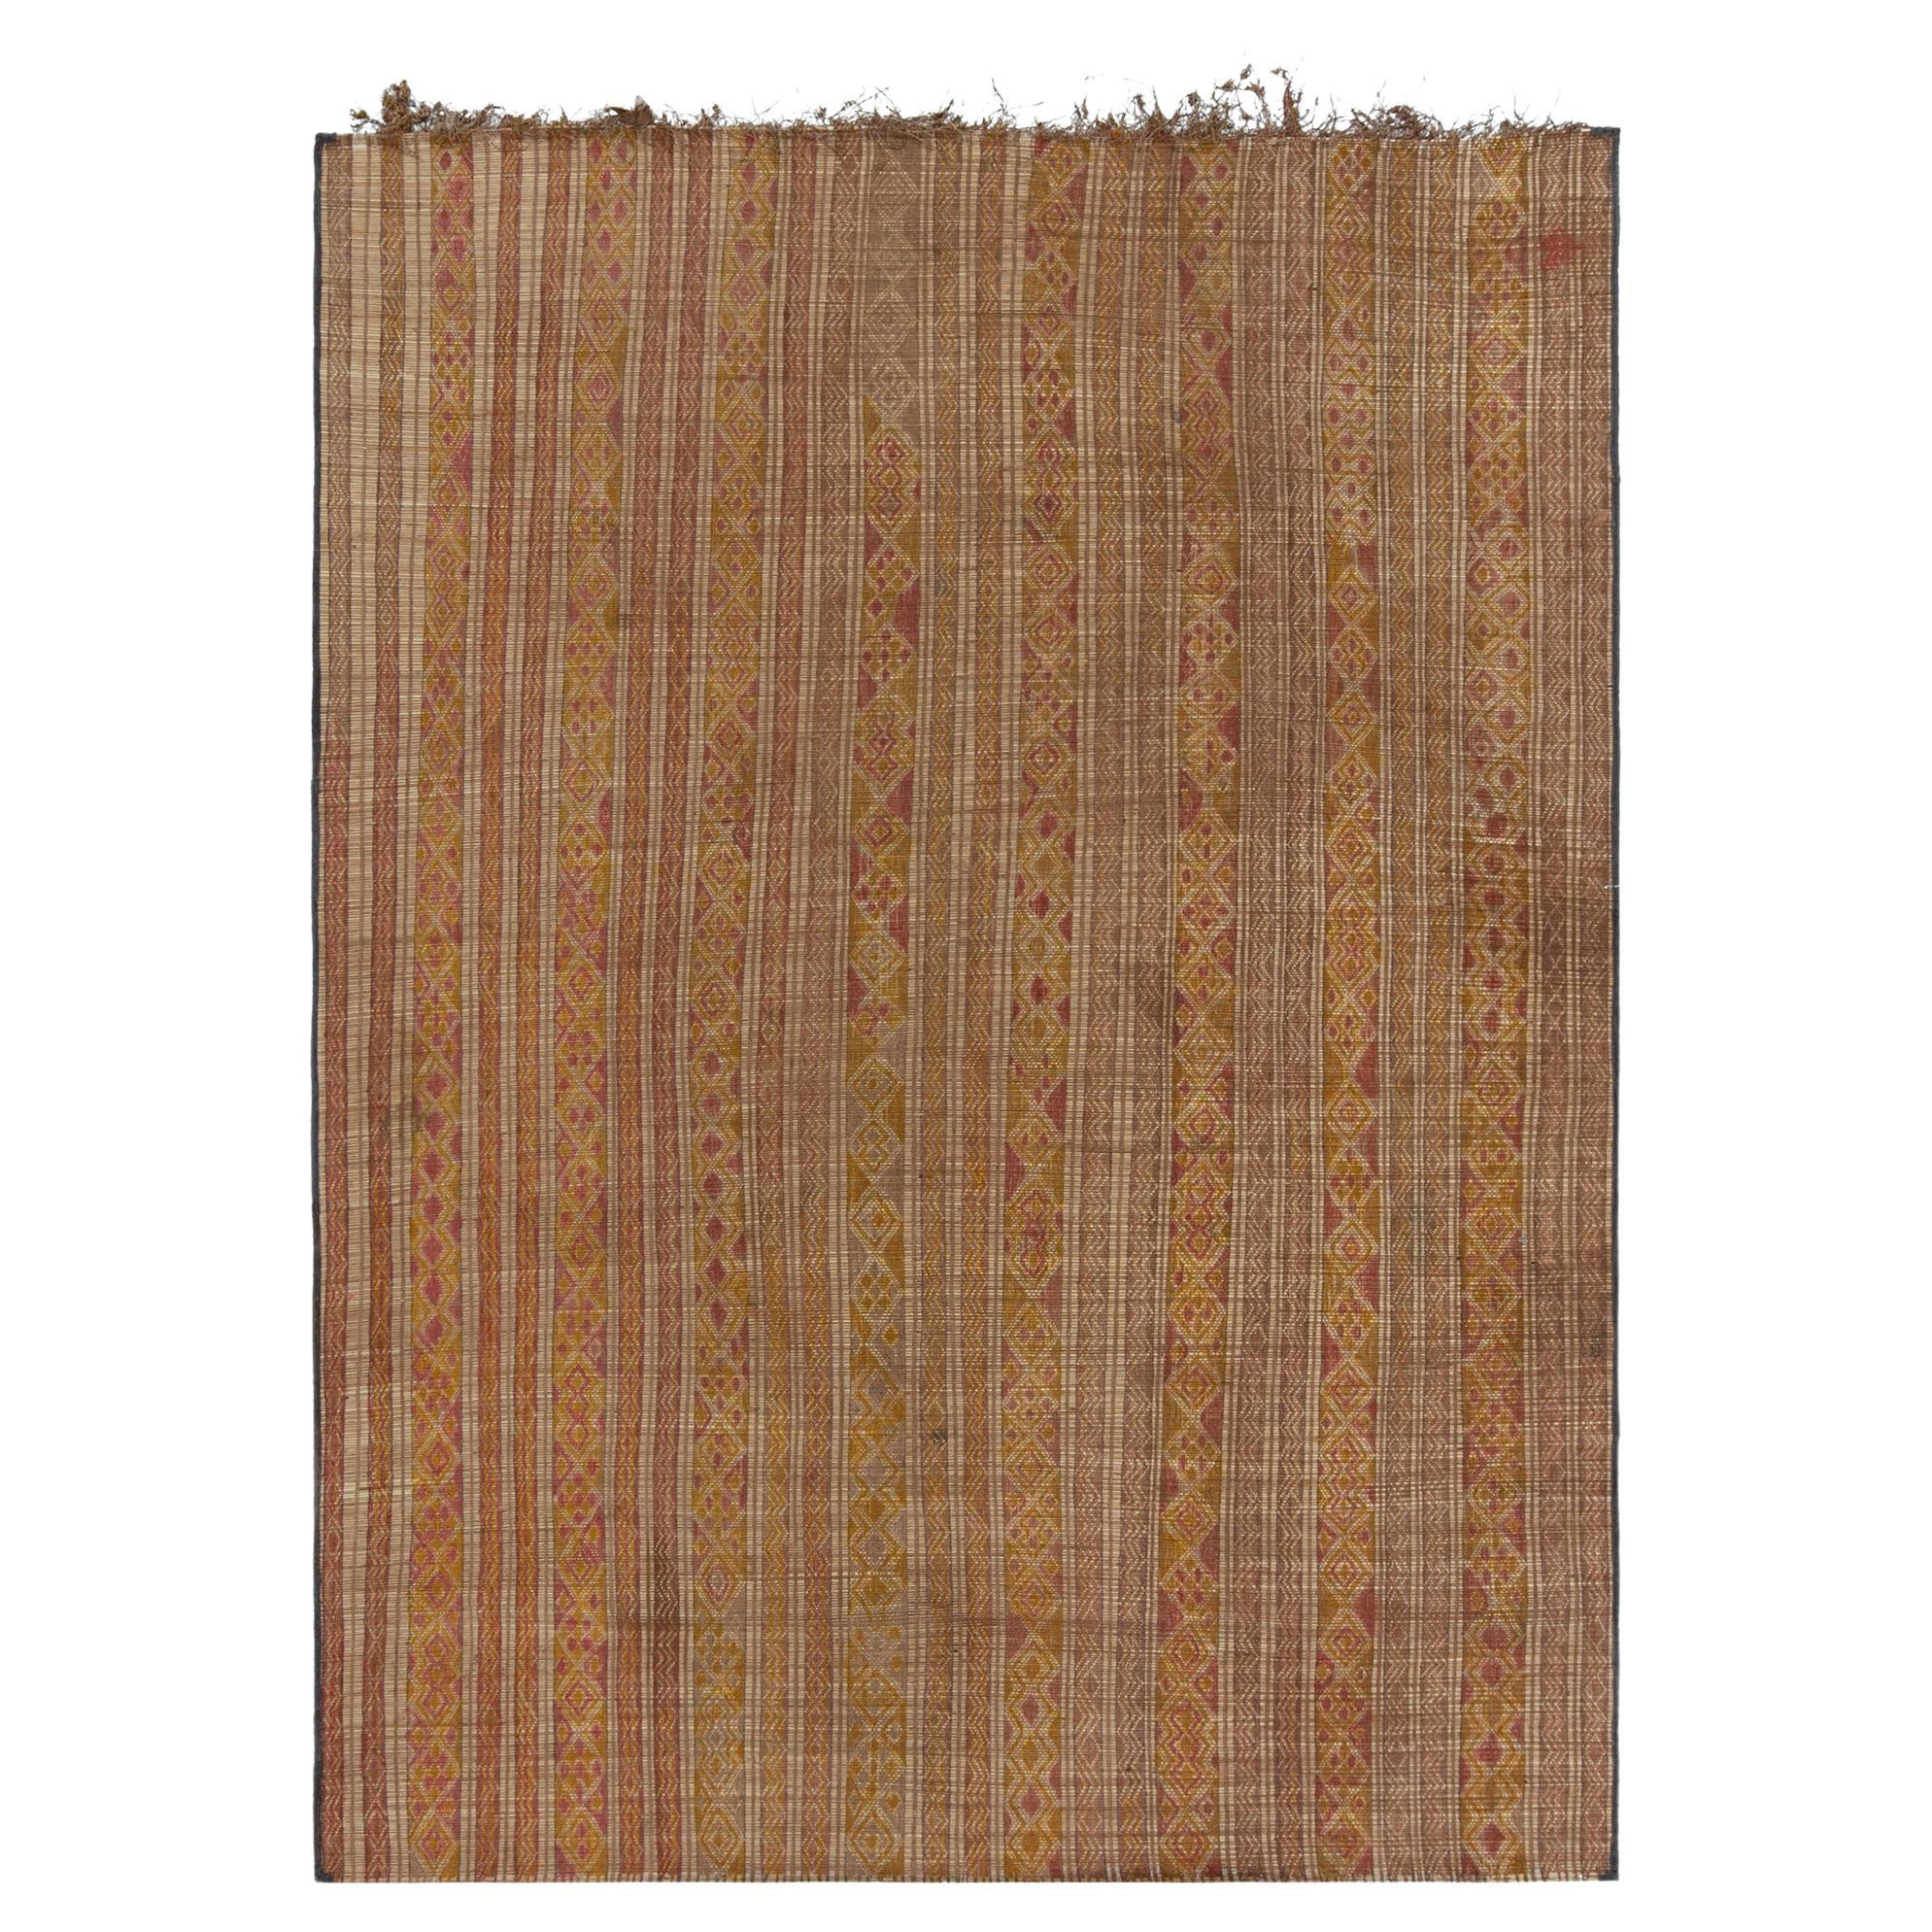 Vintage Moroccan Mat in Beige-Brown, Pink & Yellow Tribal Pattern by Rug & Kilim